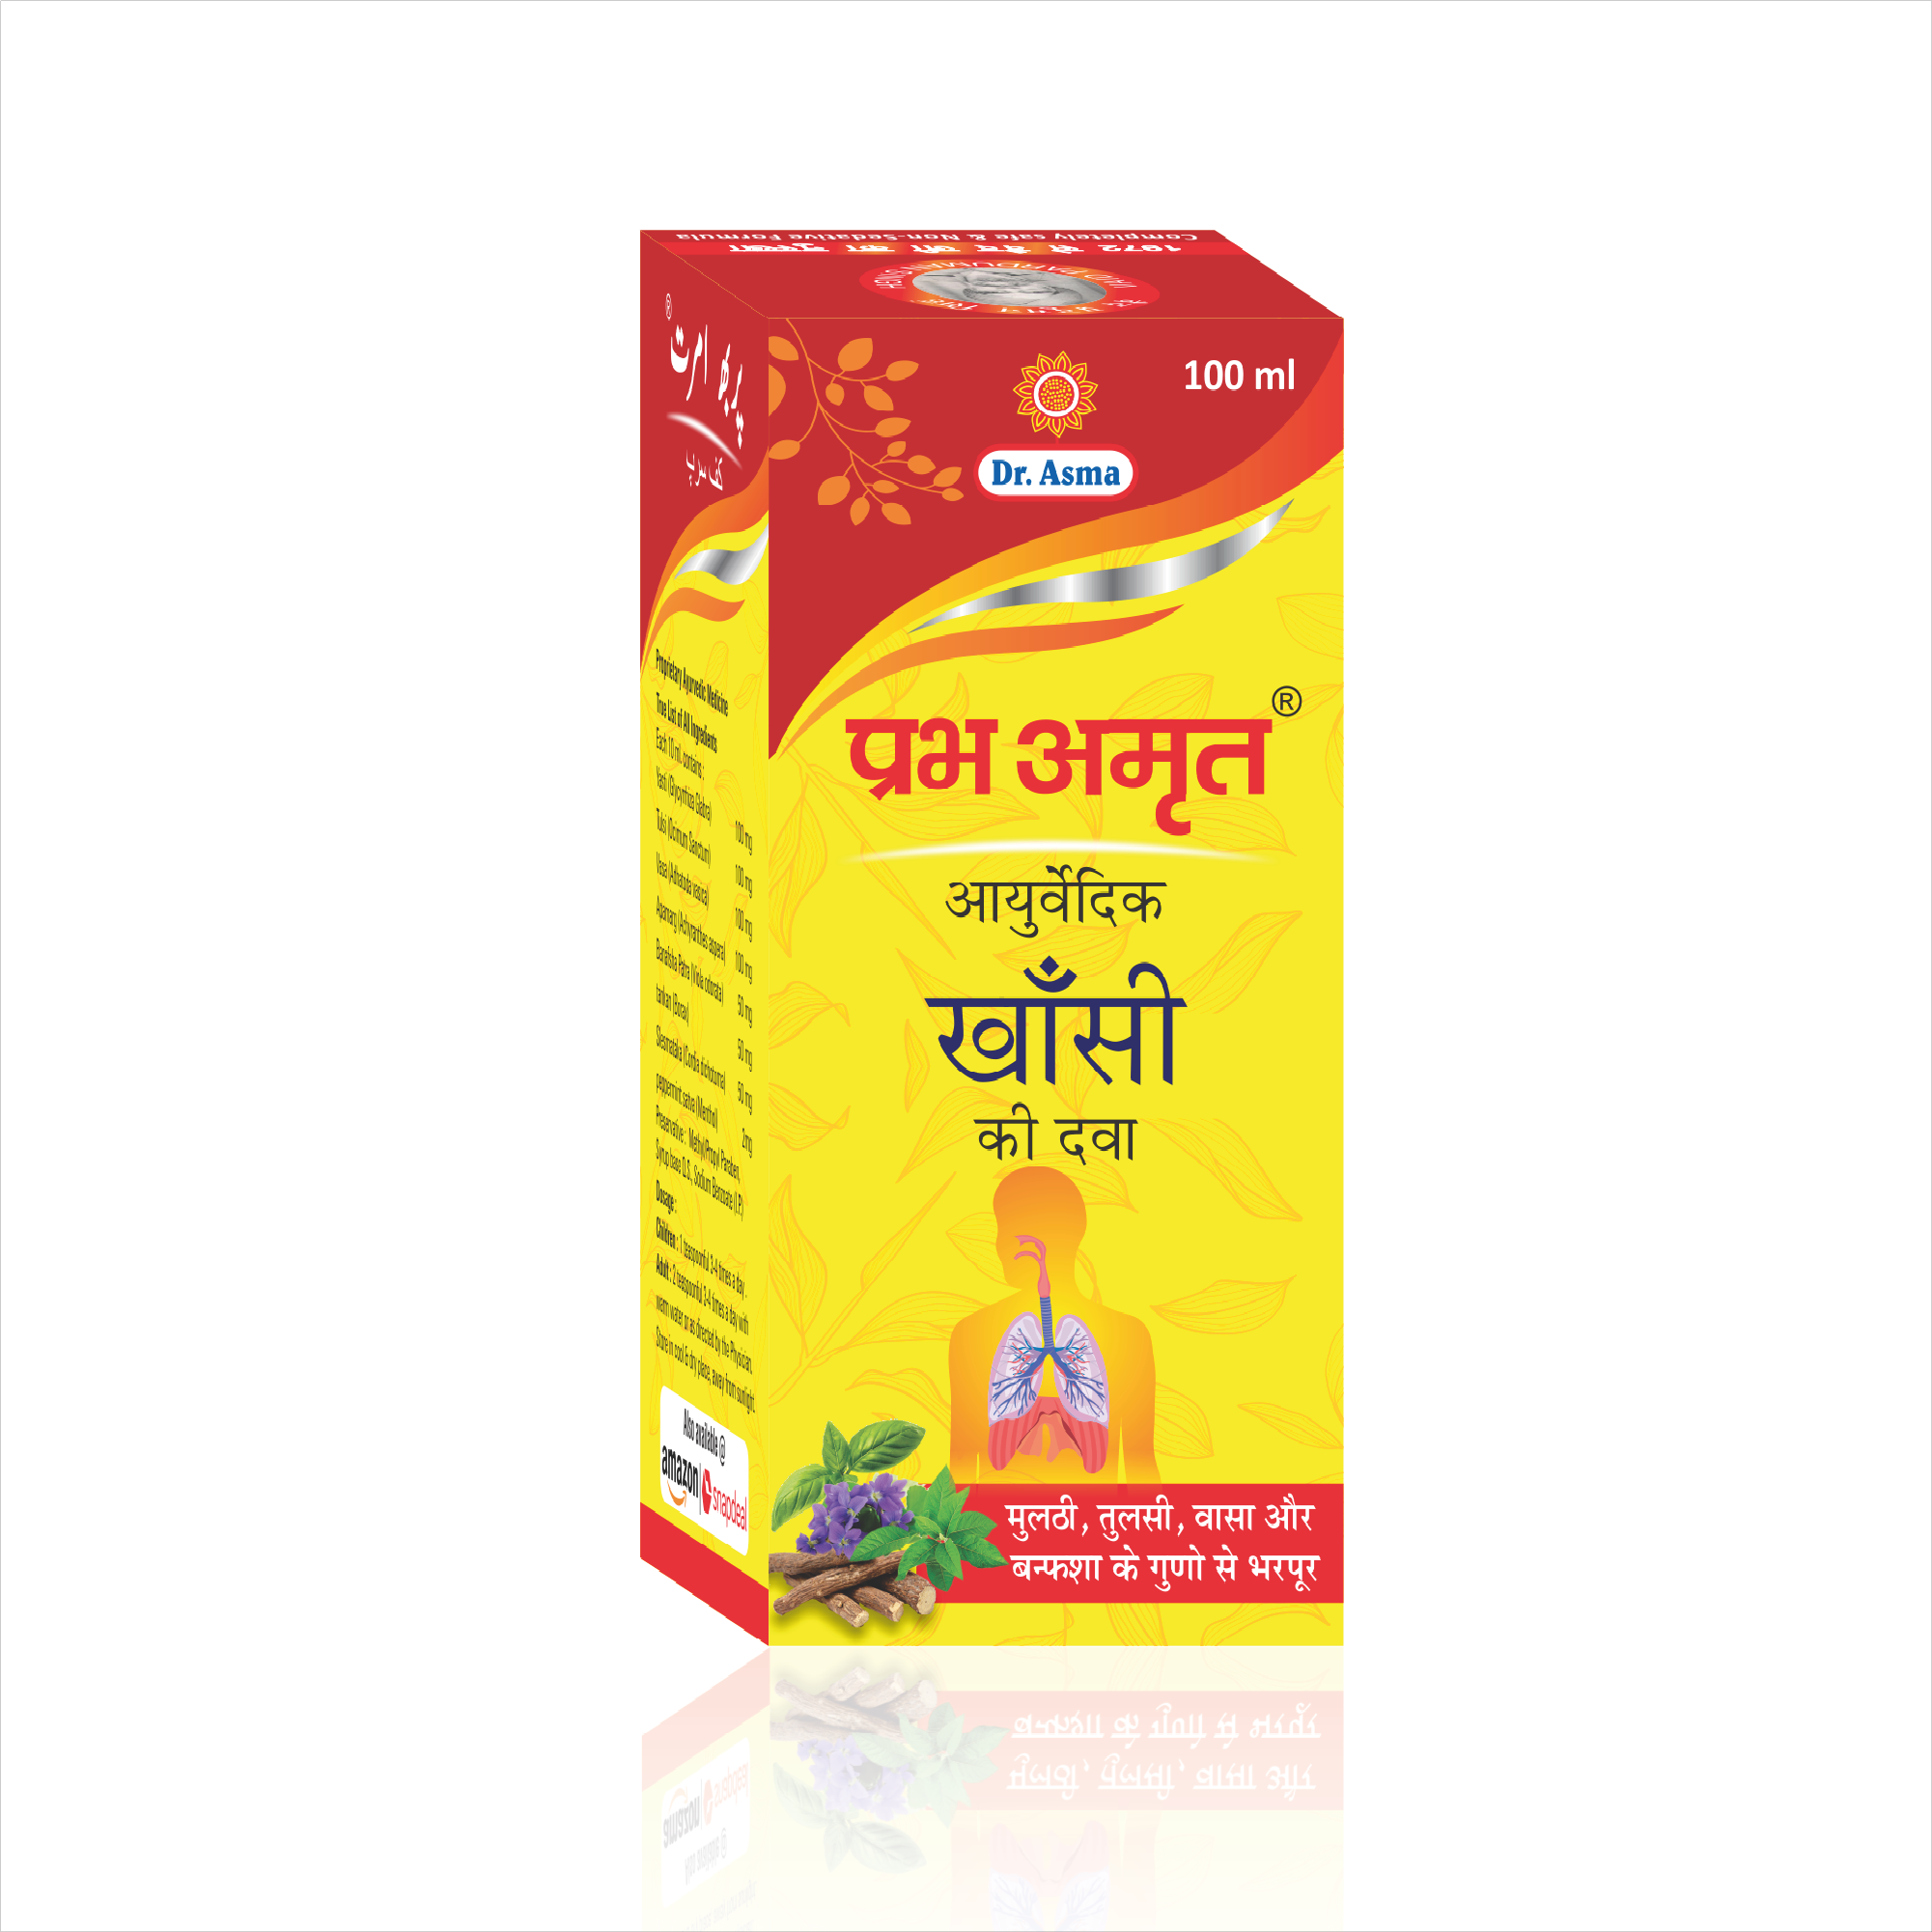 Prabhamrit ayurvedic cough syrup